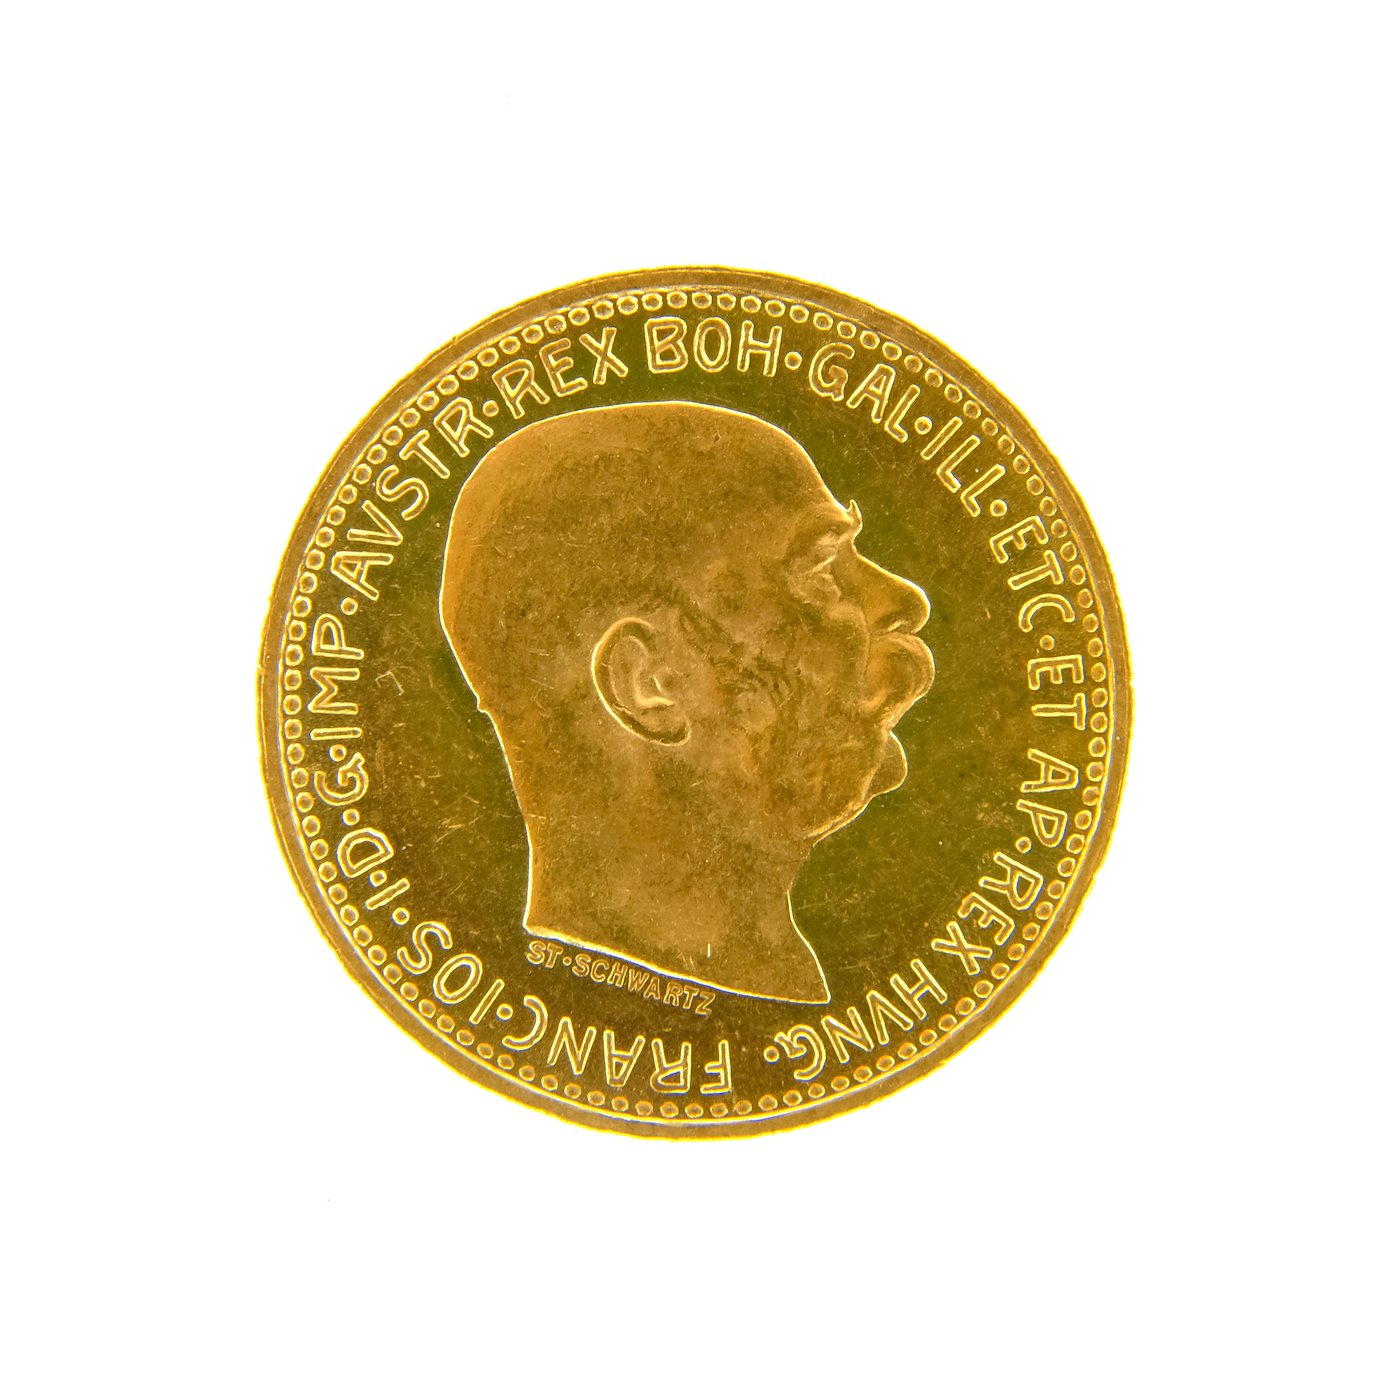 .. - Rakousko Uhersko zlatá 10 Koruna 1911 rakouská,  zlato 900/1000, hrubá hmotnost 3,387g